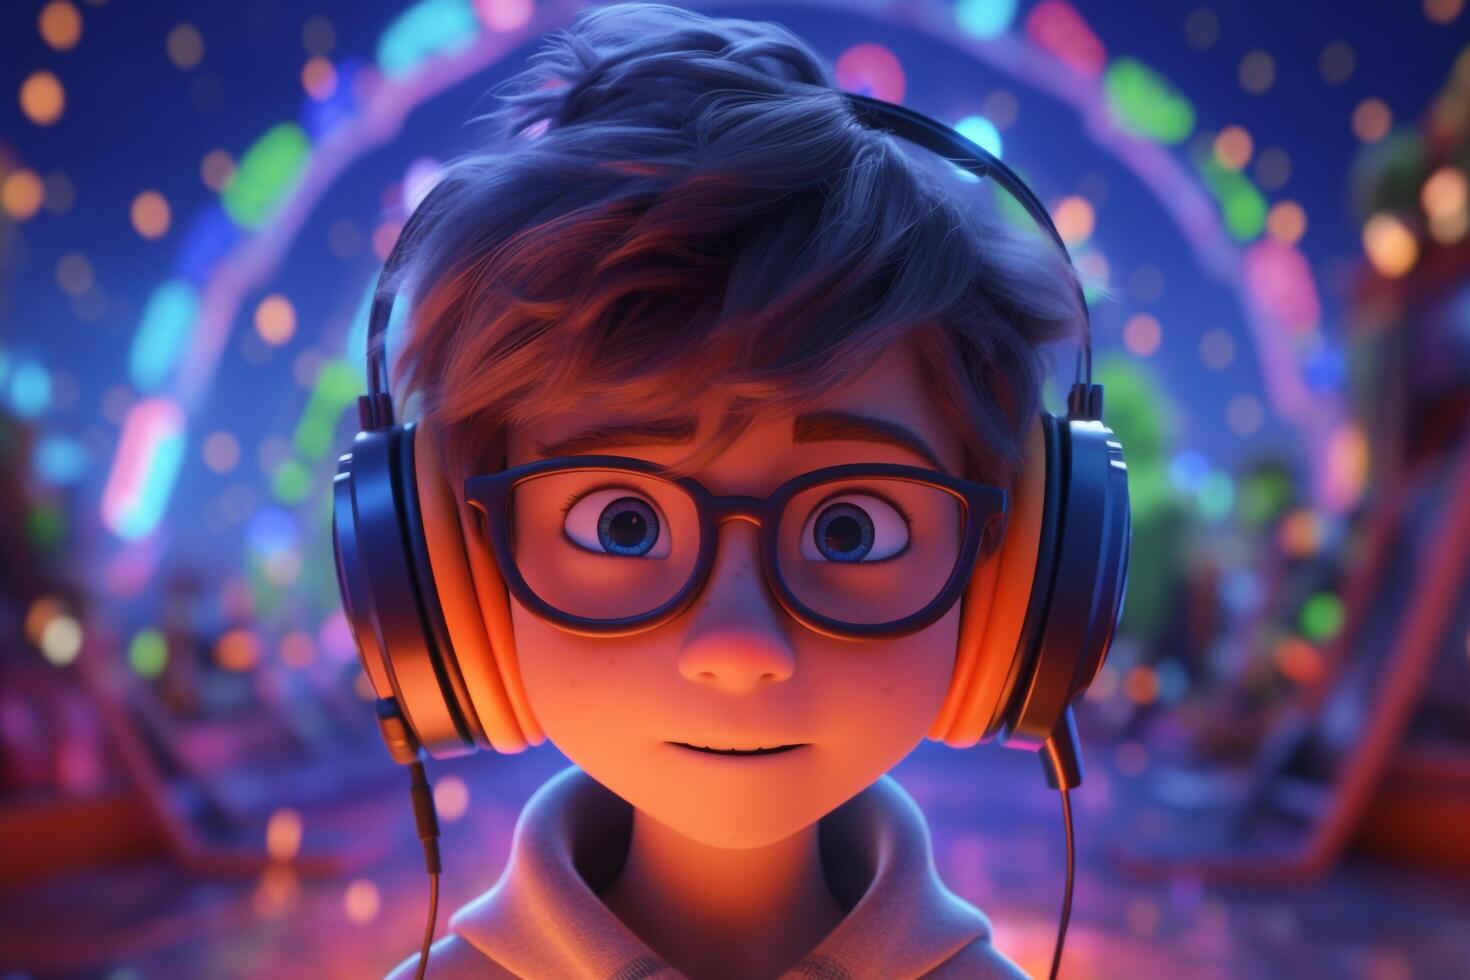 DJ Cartoon boy with headphones and colorful lights, photo